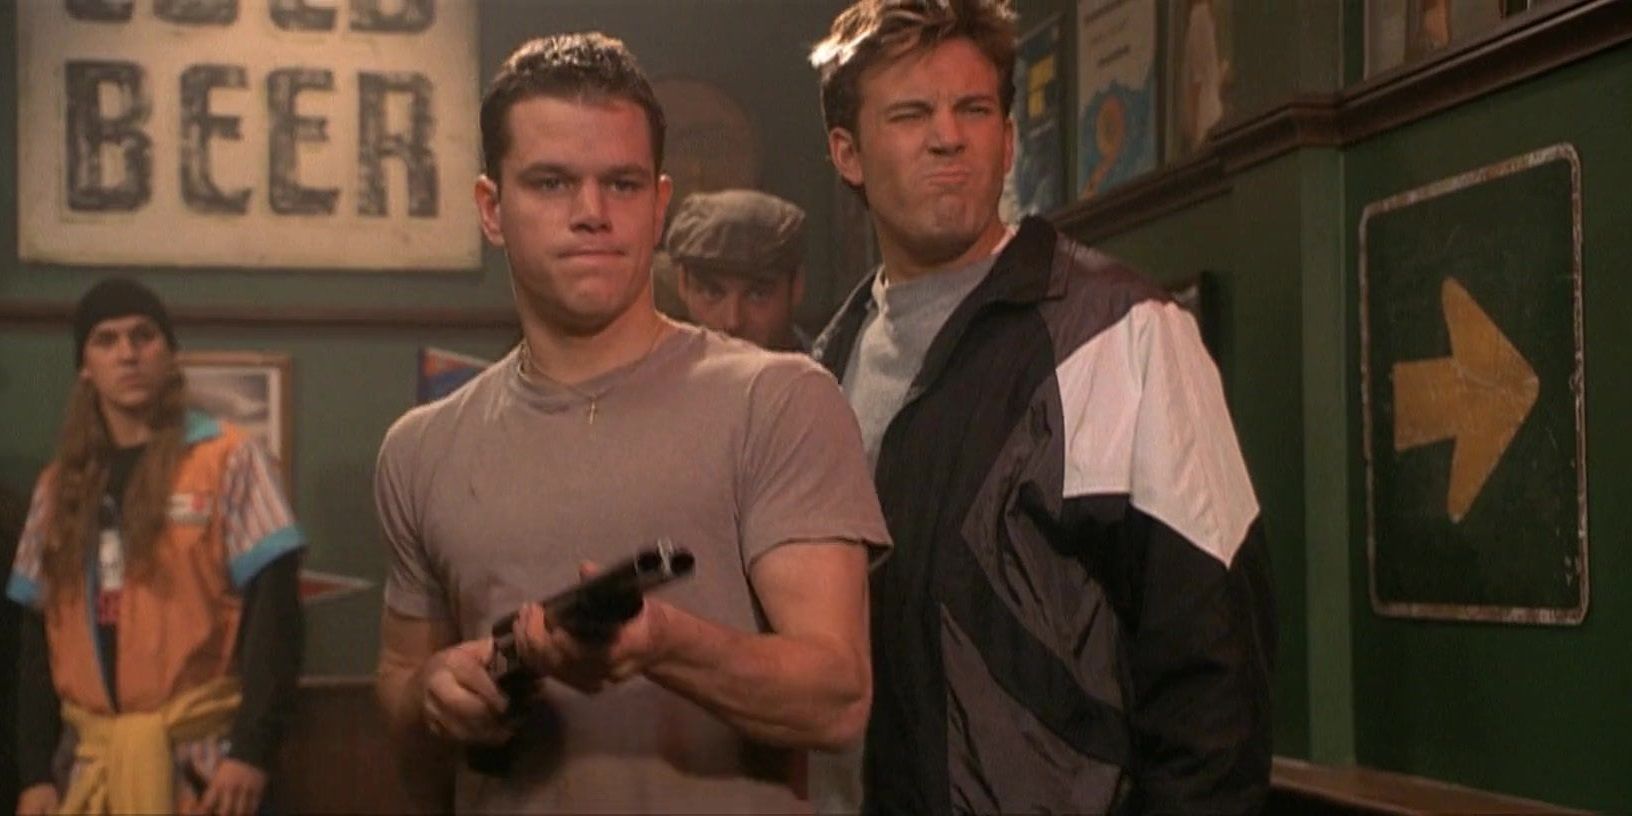 Matt Damon and Ben Affleck starring in Good Will Hunting 2 in Jay and Silent Bob Strike Back